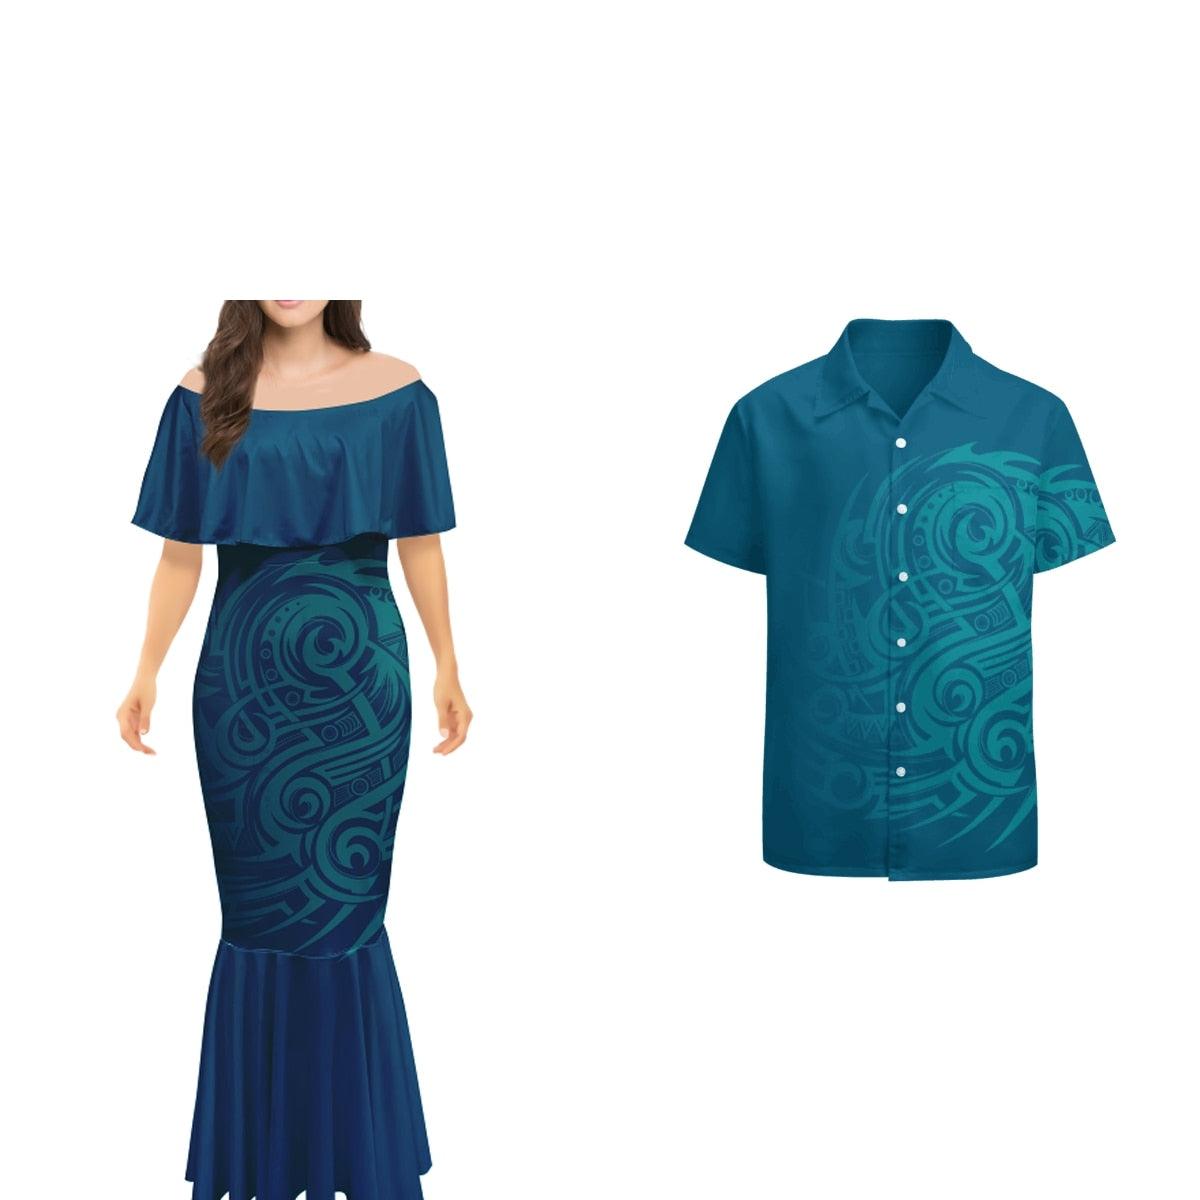 Polynesian Women Dresses - The Trendy